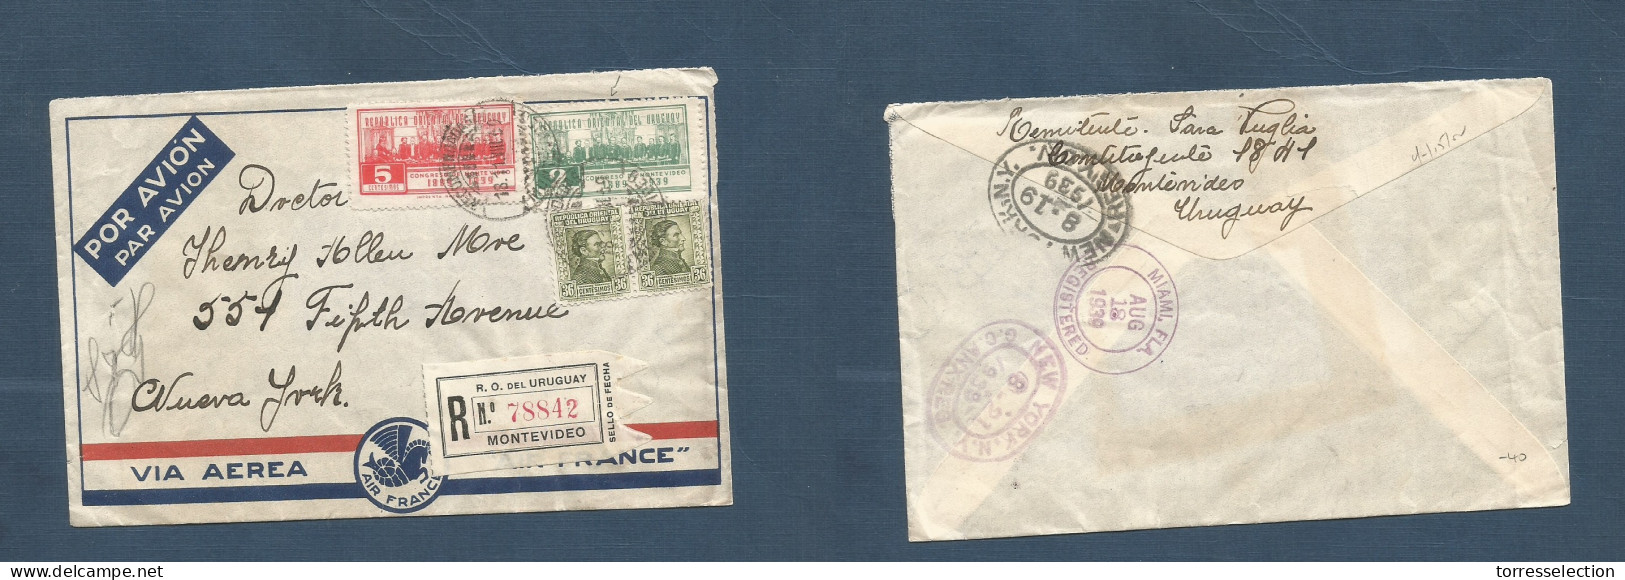 URUGUAY. 1939 (11 Aug) Montevideo - USA, NYC (18 Aug) Registered Air France Multifkd Env. Congreso Conm Issue. Fine. XSA - Uruguay